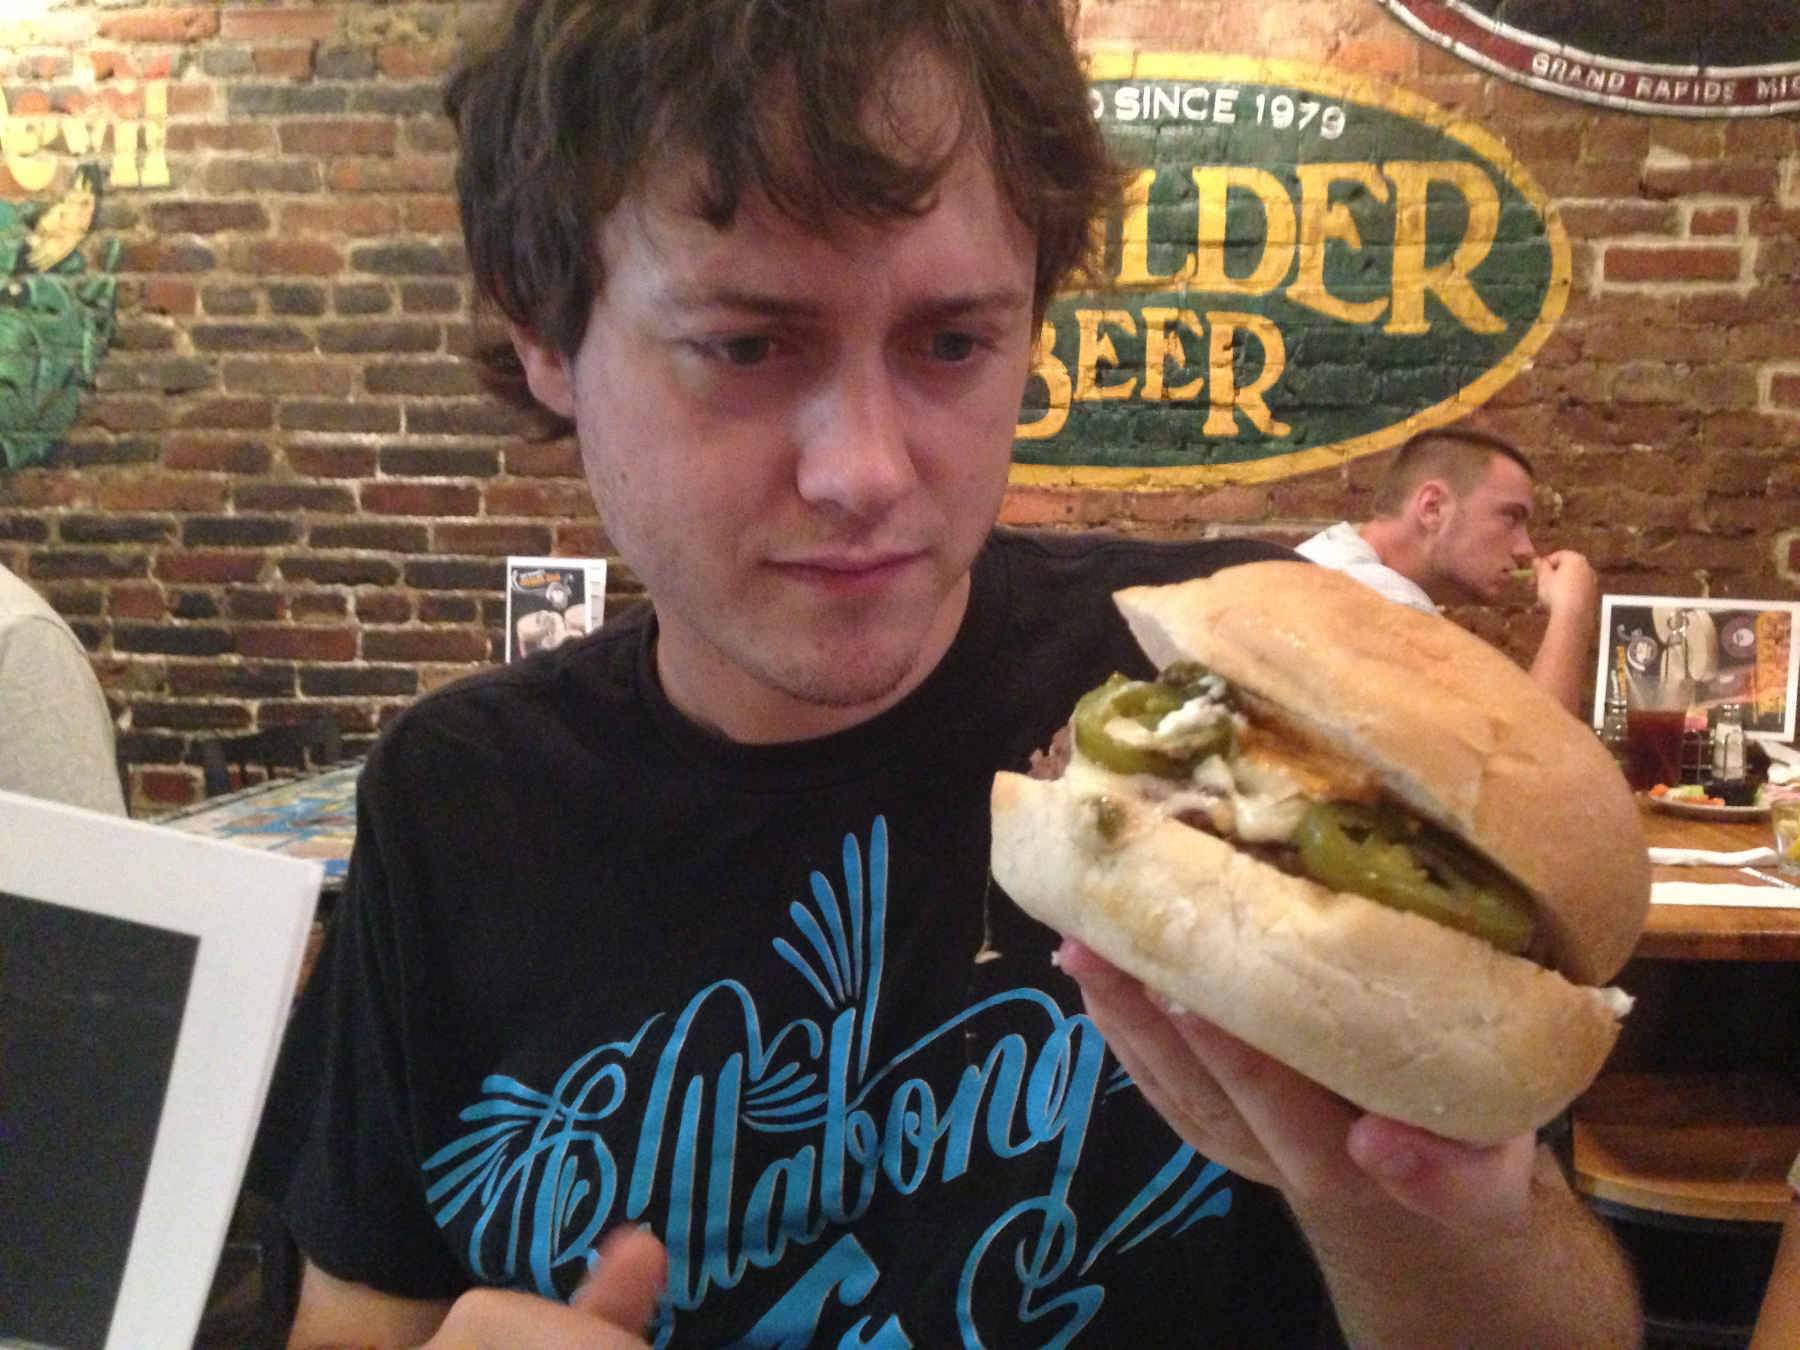 Richard with his burger